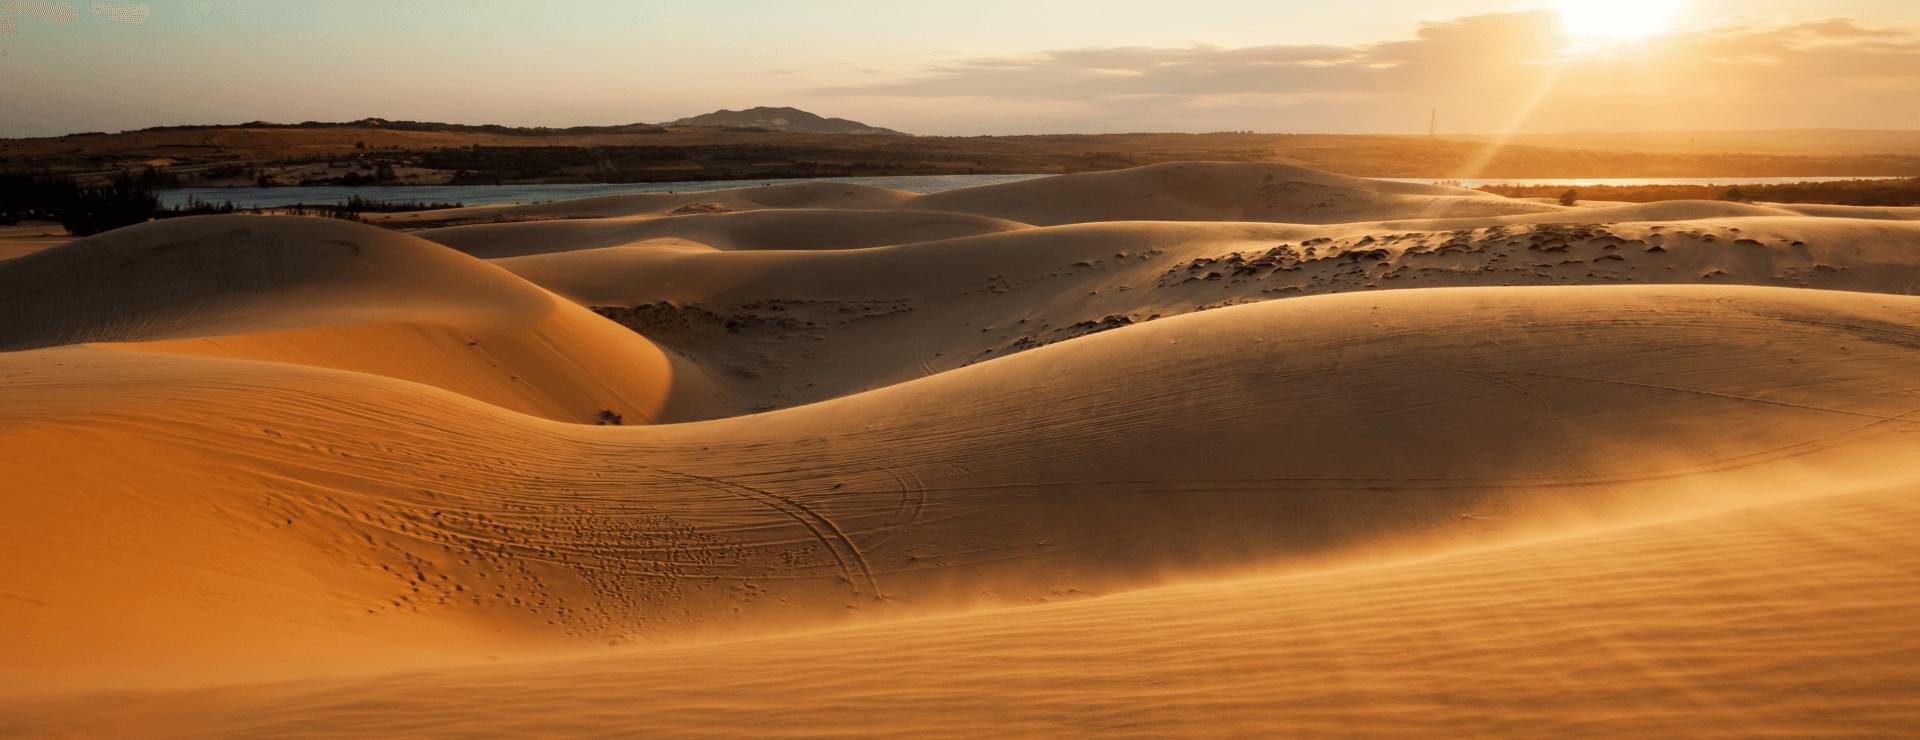 Mui Ne Red Sand Dune Overview